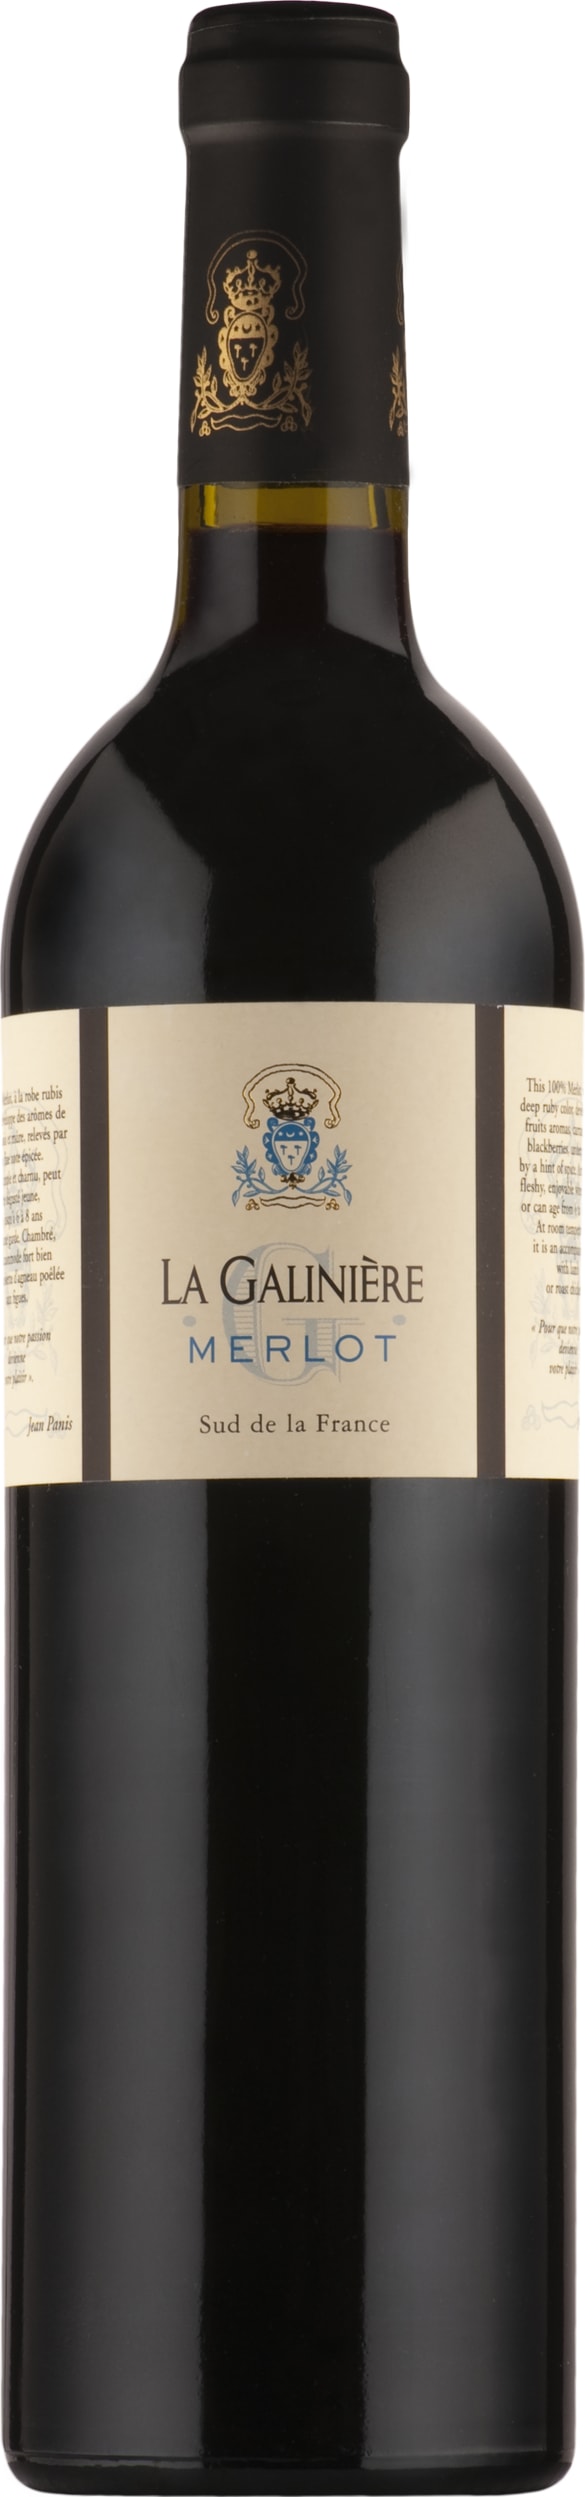 Chateau du Donjon La Galiniere Merlot 2020 75cl - Buy Chateau du Donjon Wines from GREAT WINES DIRECT wine shop